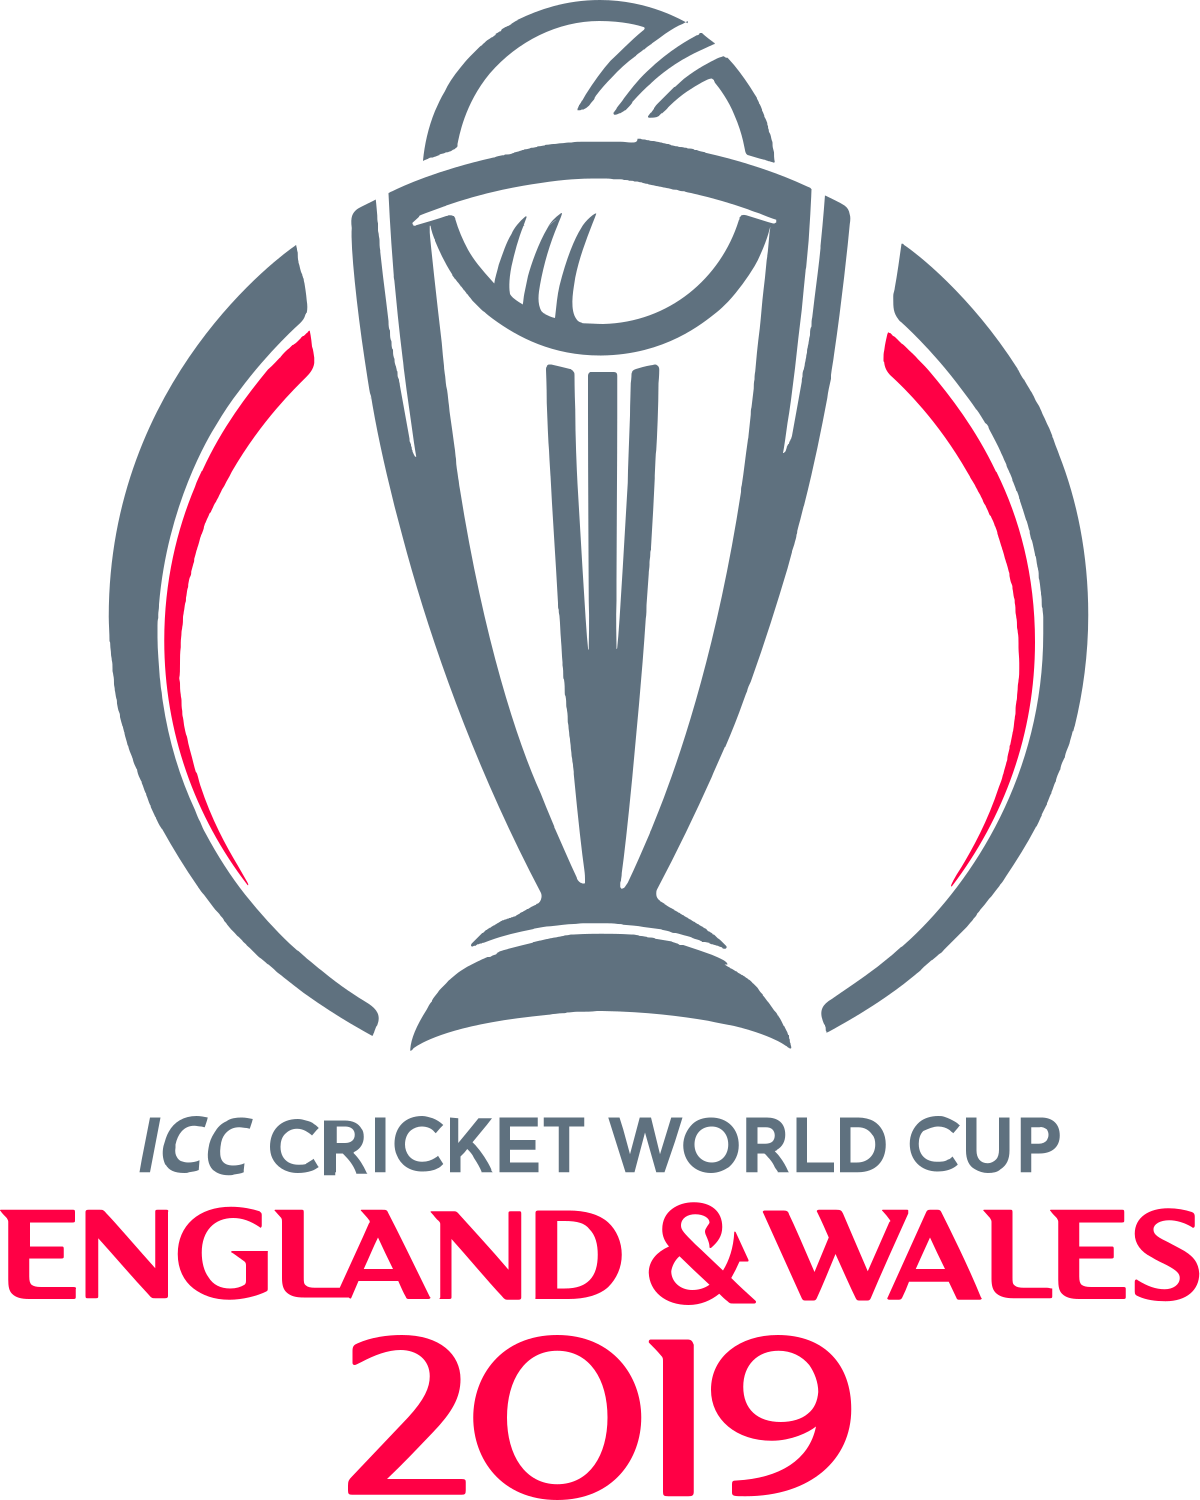 CC_Cricket_World_Cup_2019